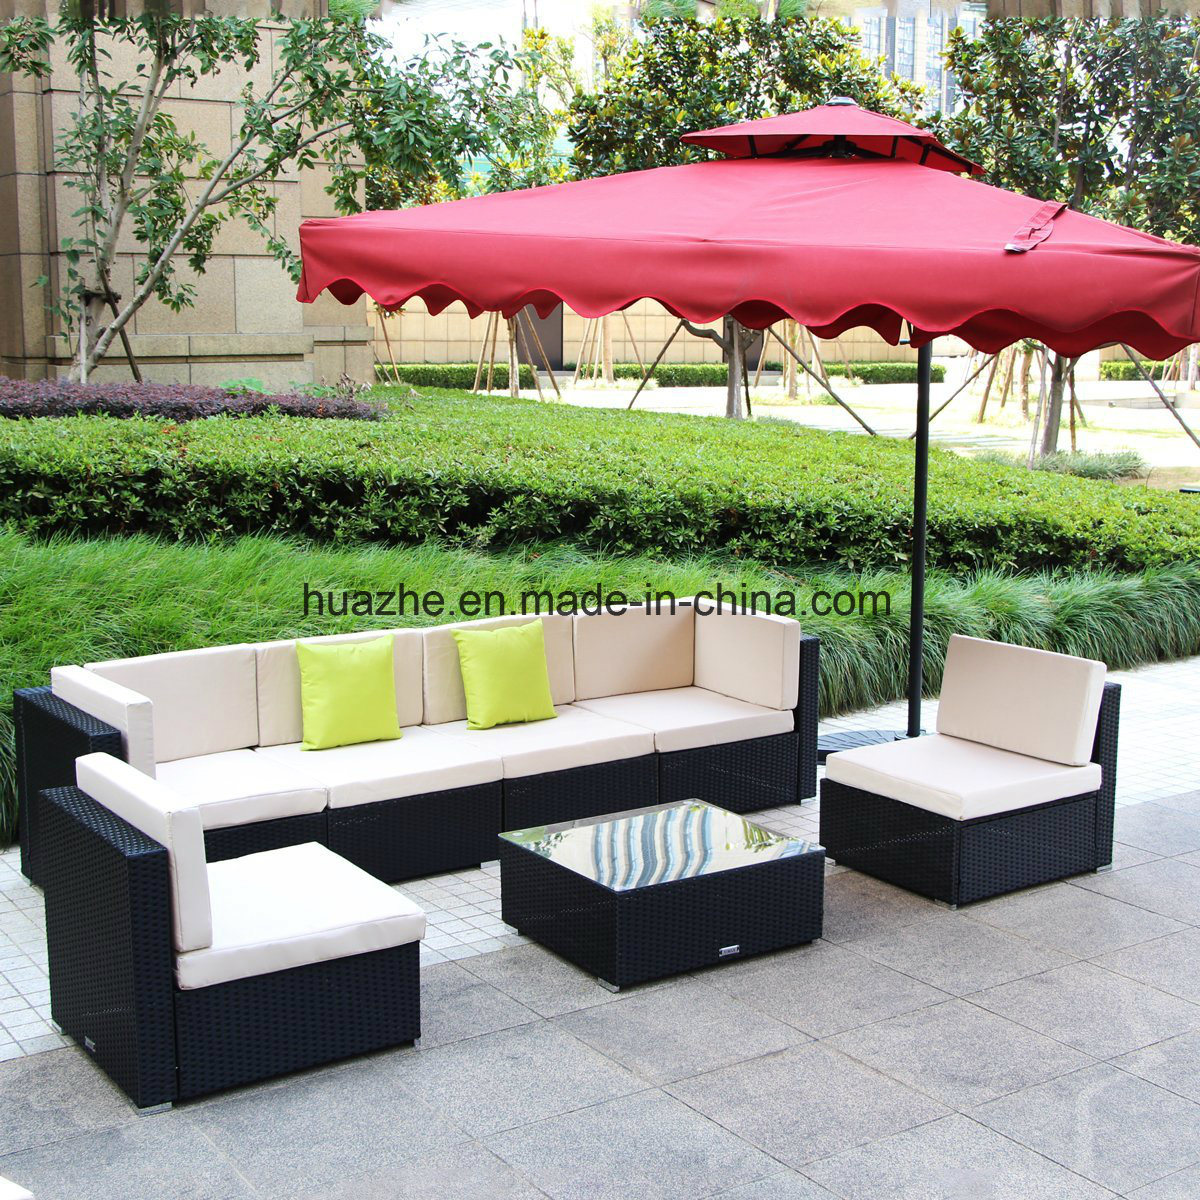 Wicker Patio Sofa Outdoor Chair Table Home Garden Wicker Furniture Rattan Furniture